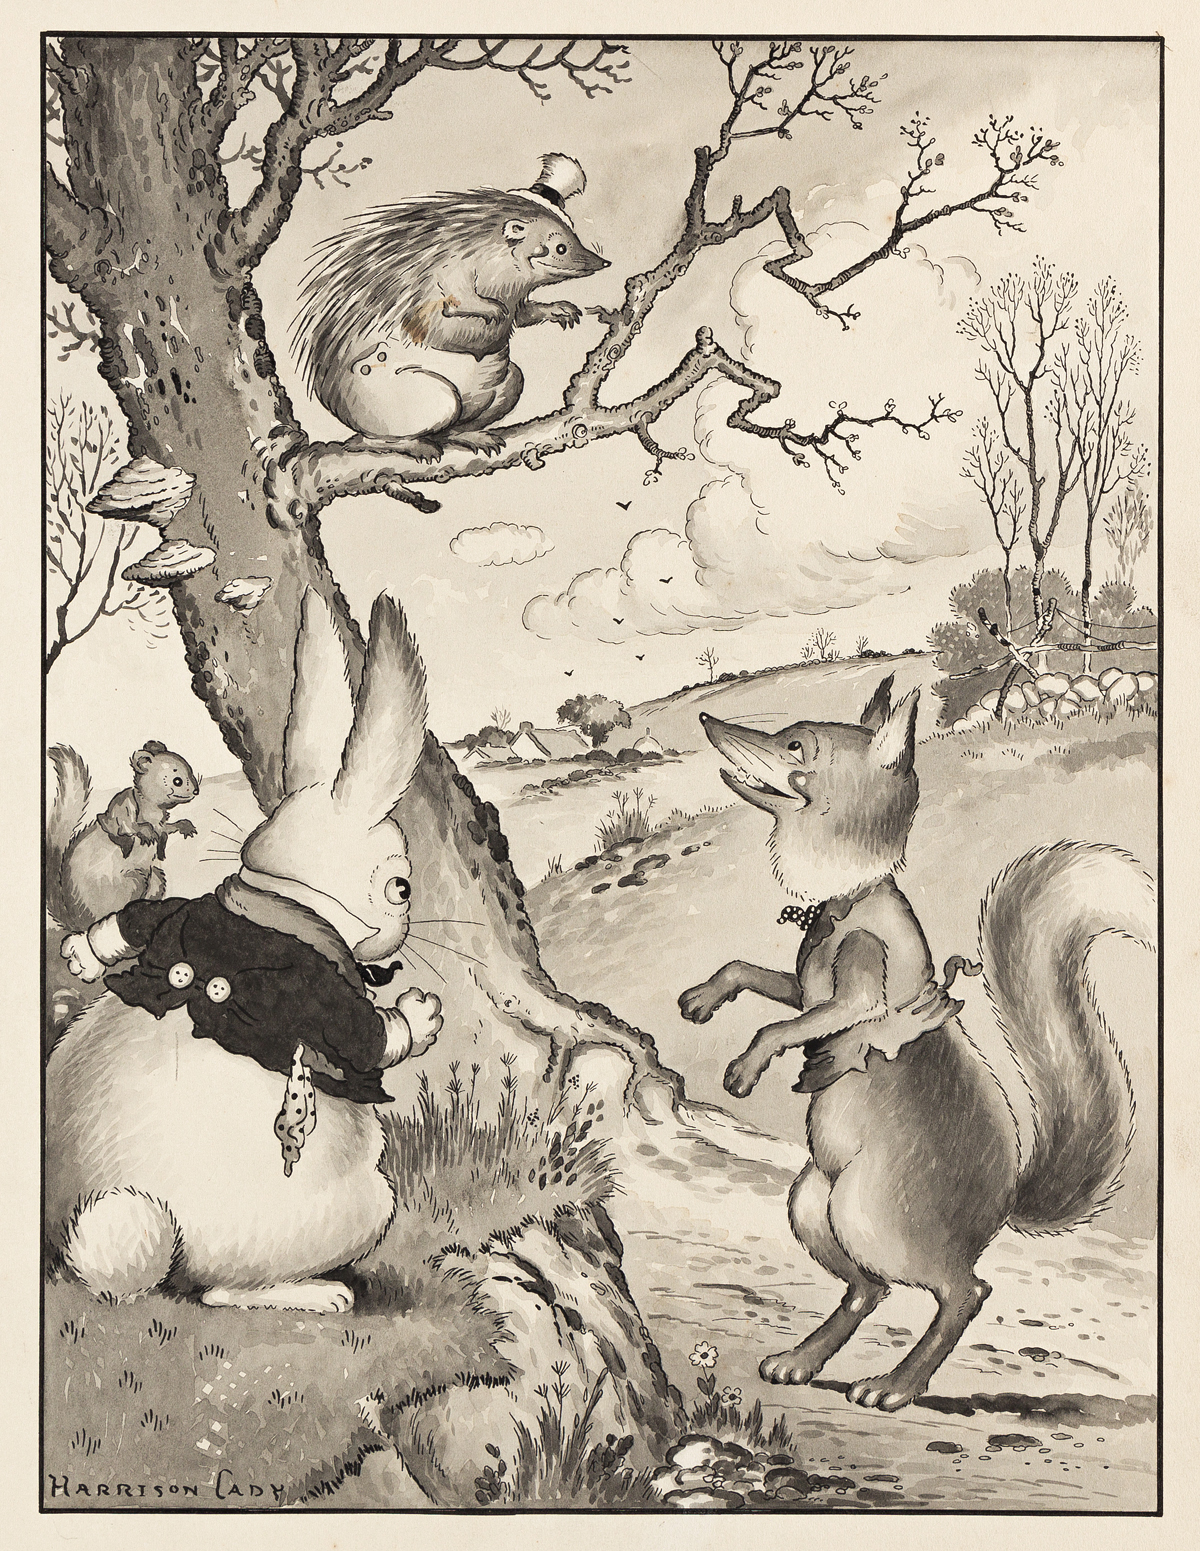 HARRISON CADY (1877-1970) Pooh! exclaimed Reddy Fox. Whos afraid of that fellow? [CHILDRENS]